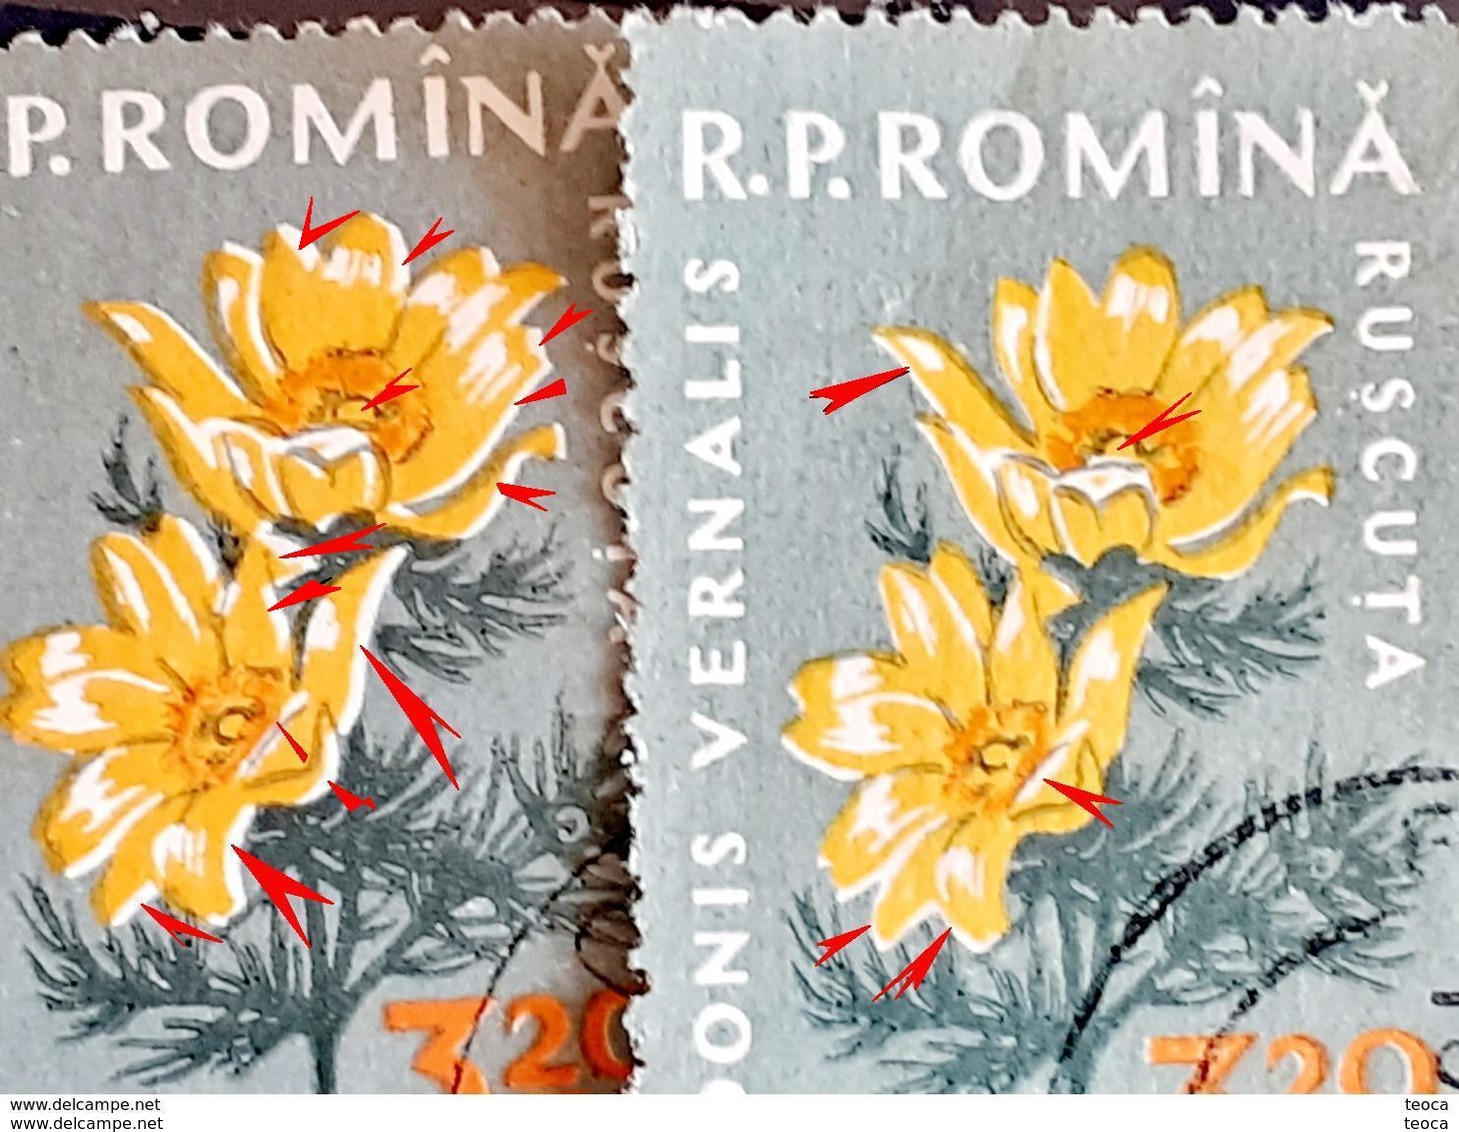 Error Romania 1960, MI 1823 Flowers With Errors  Used - Variedades Y Curiosidades